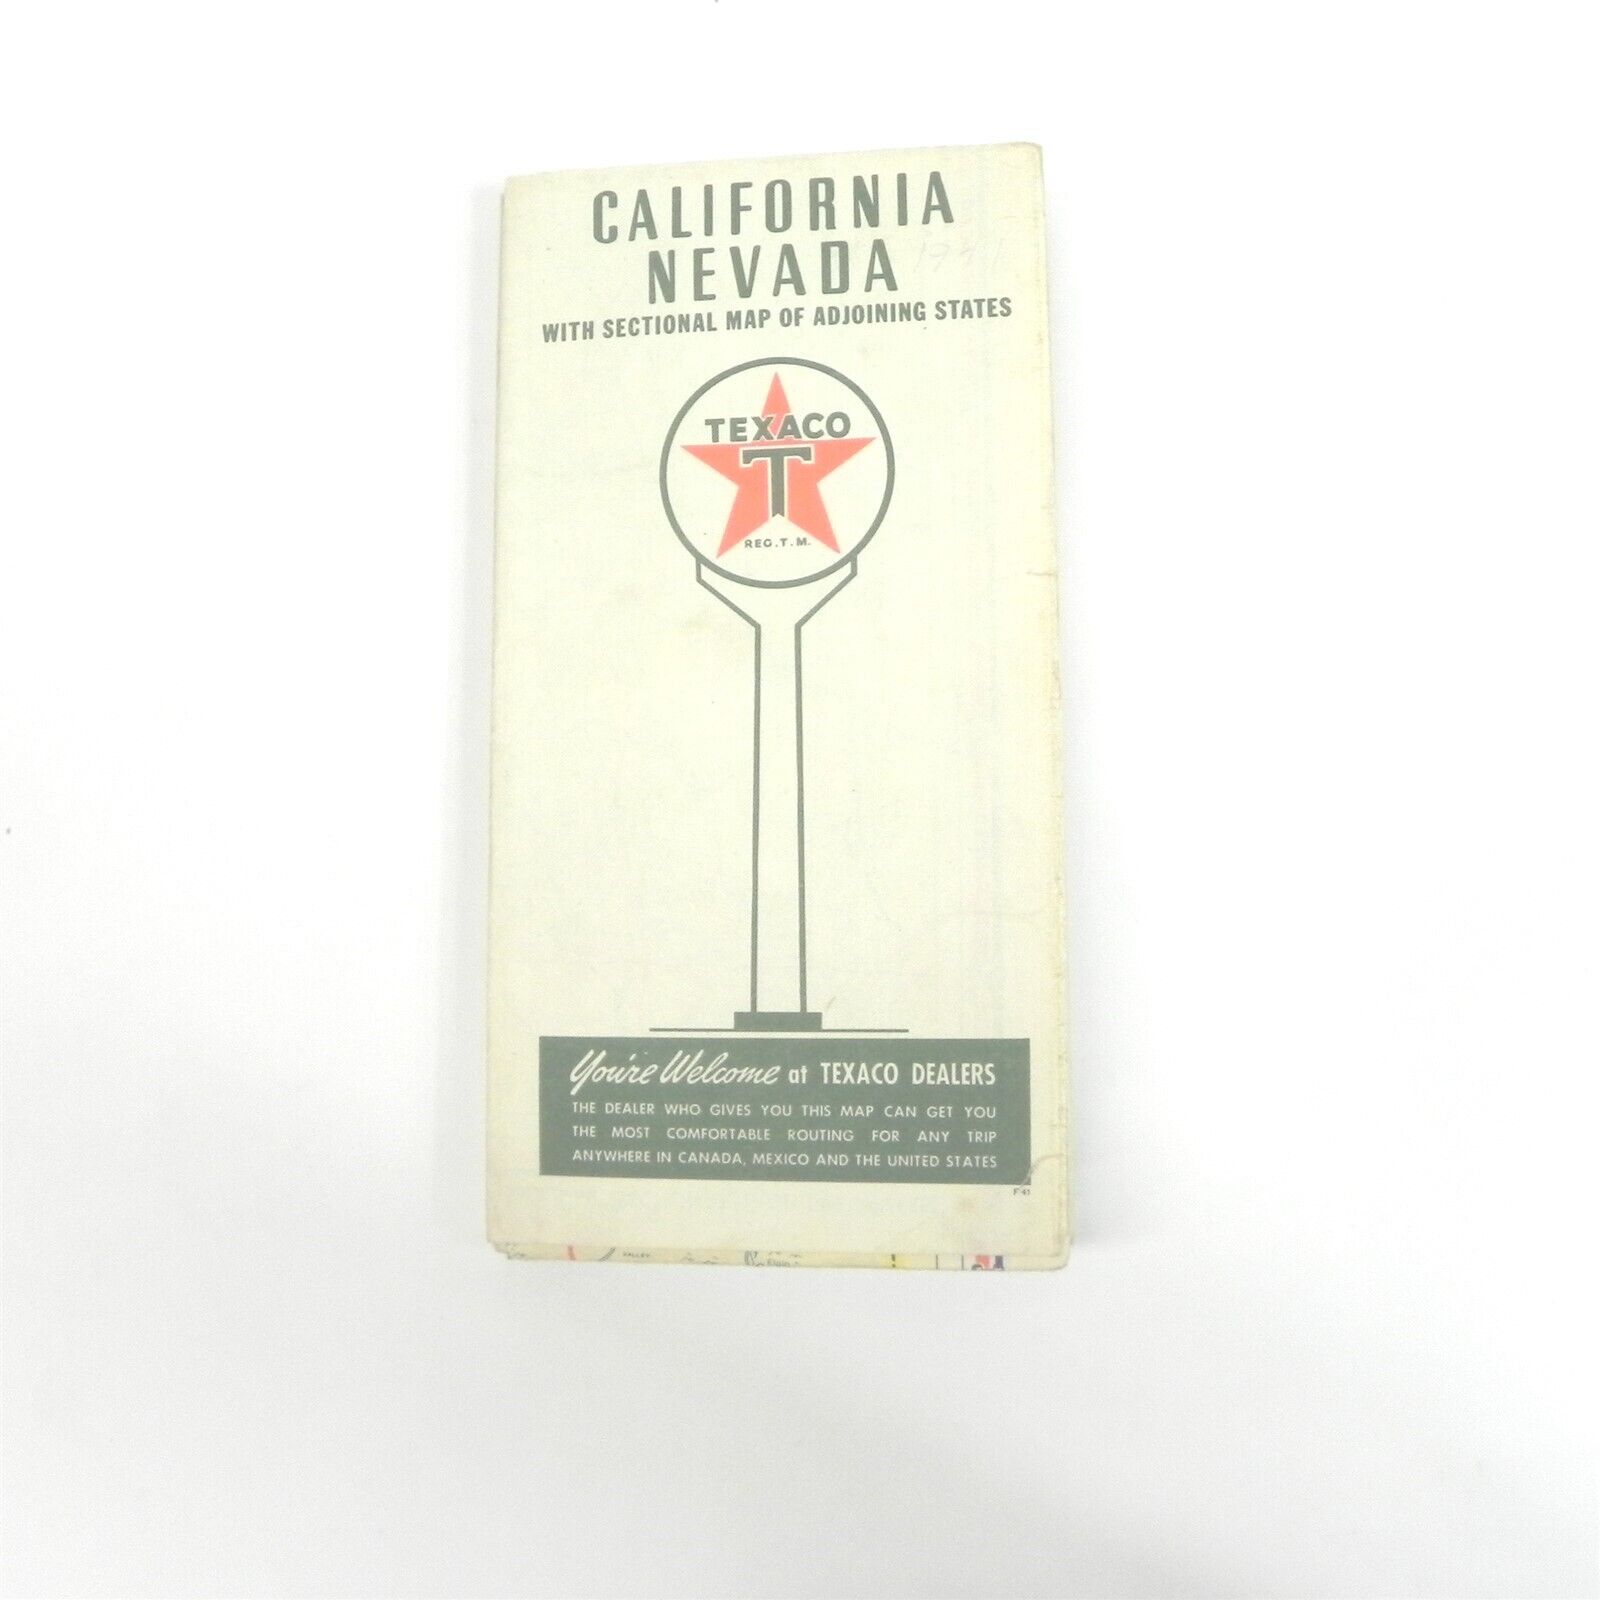 VINTAGE 1941 TEXACO OIL COMPANY MAP OF CALIFORNIA NEVADA TOURING GUIDE GAS OIL